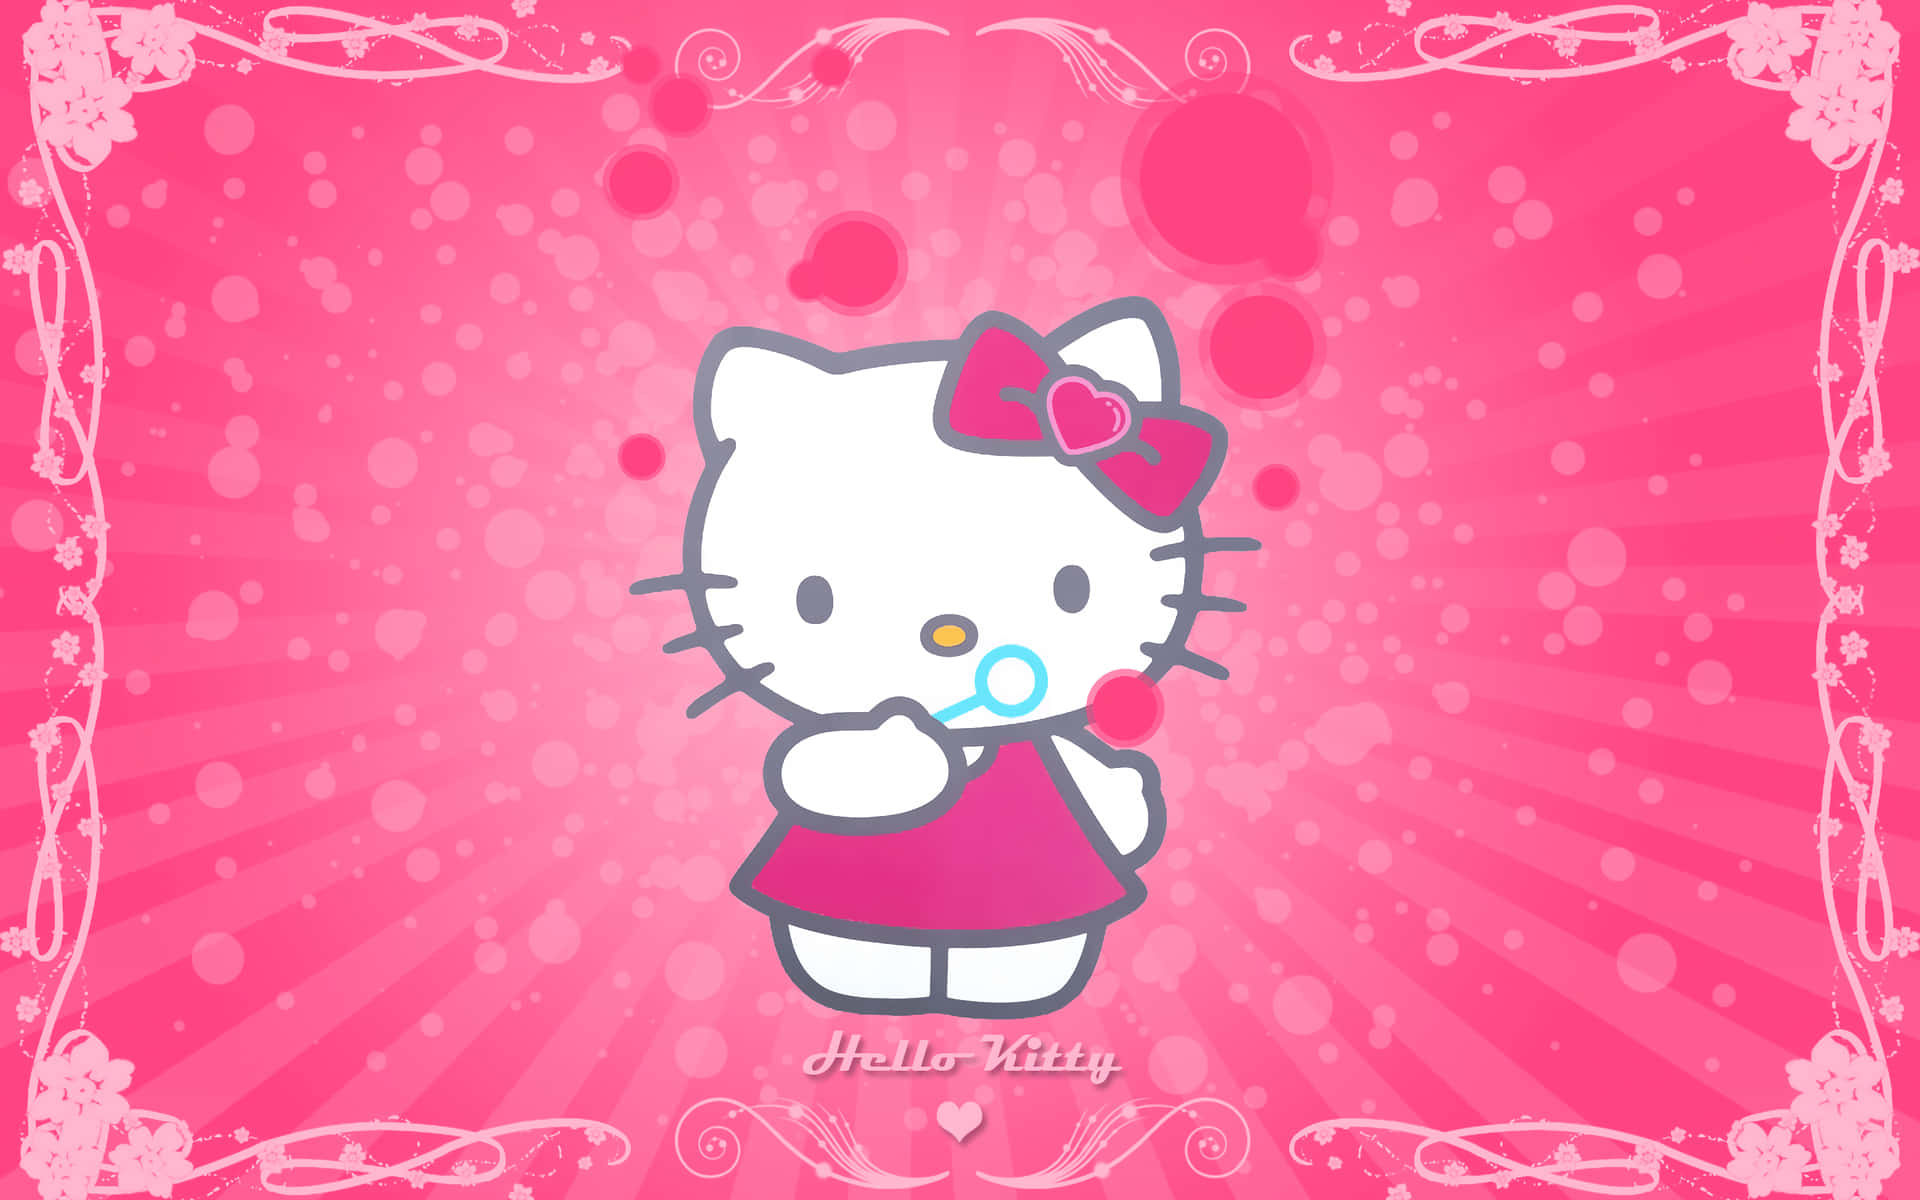 Cute Pink Hello Kitty Blowing Bubbles Wallpaper